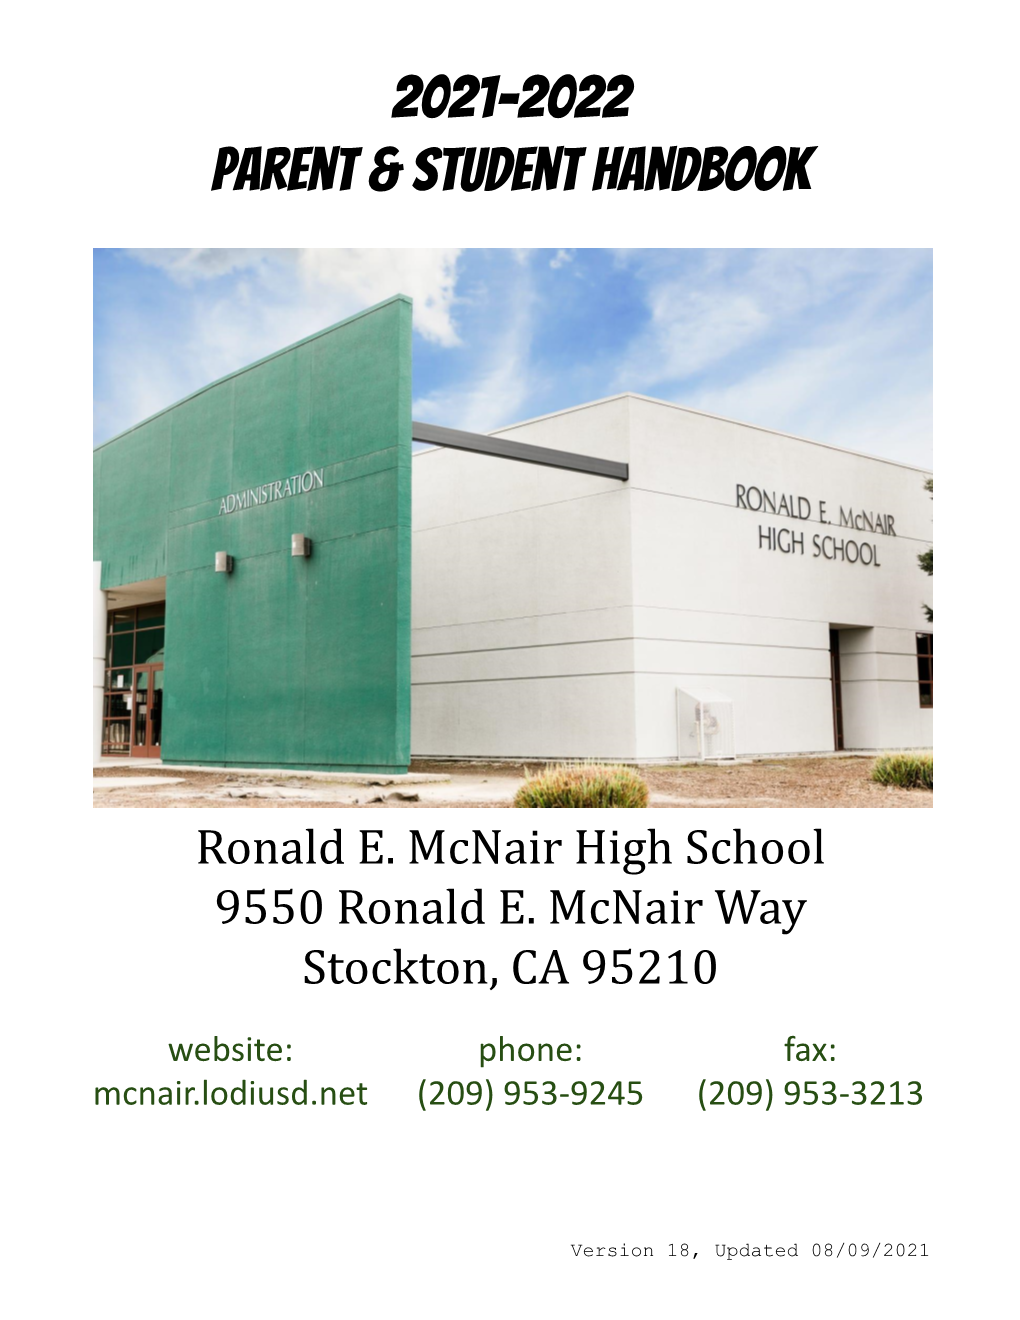 2021-2022 Parent & Student Handbook